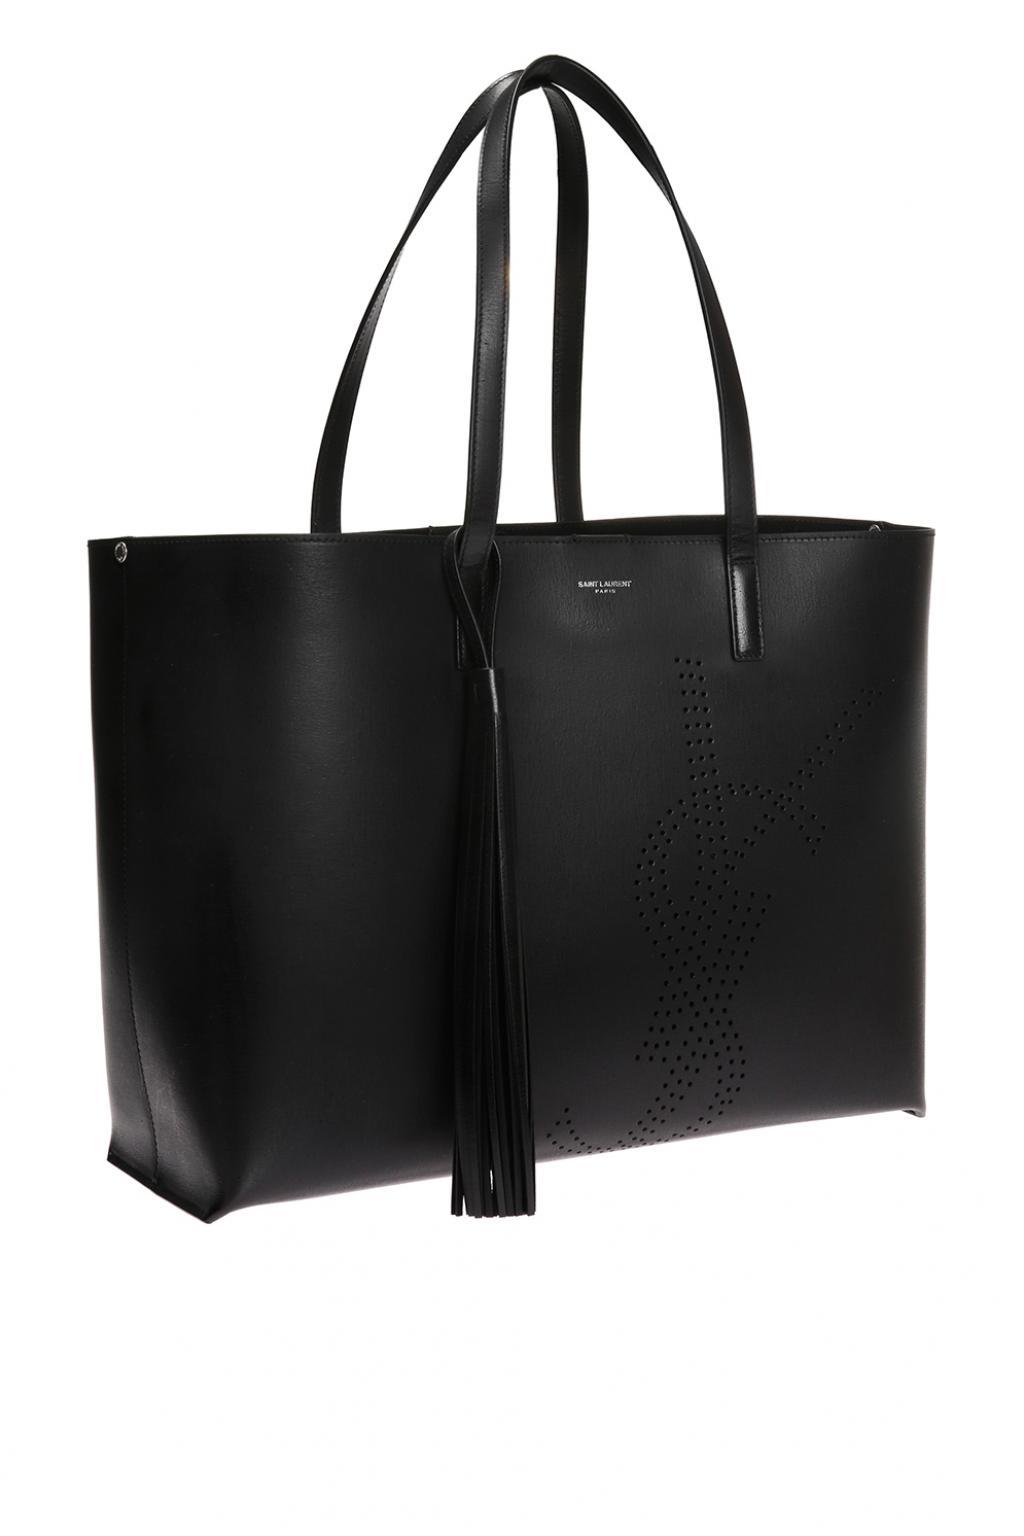 Saint Laurent Perforated Shopper Bag in Black | Lyst